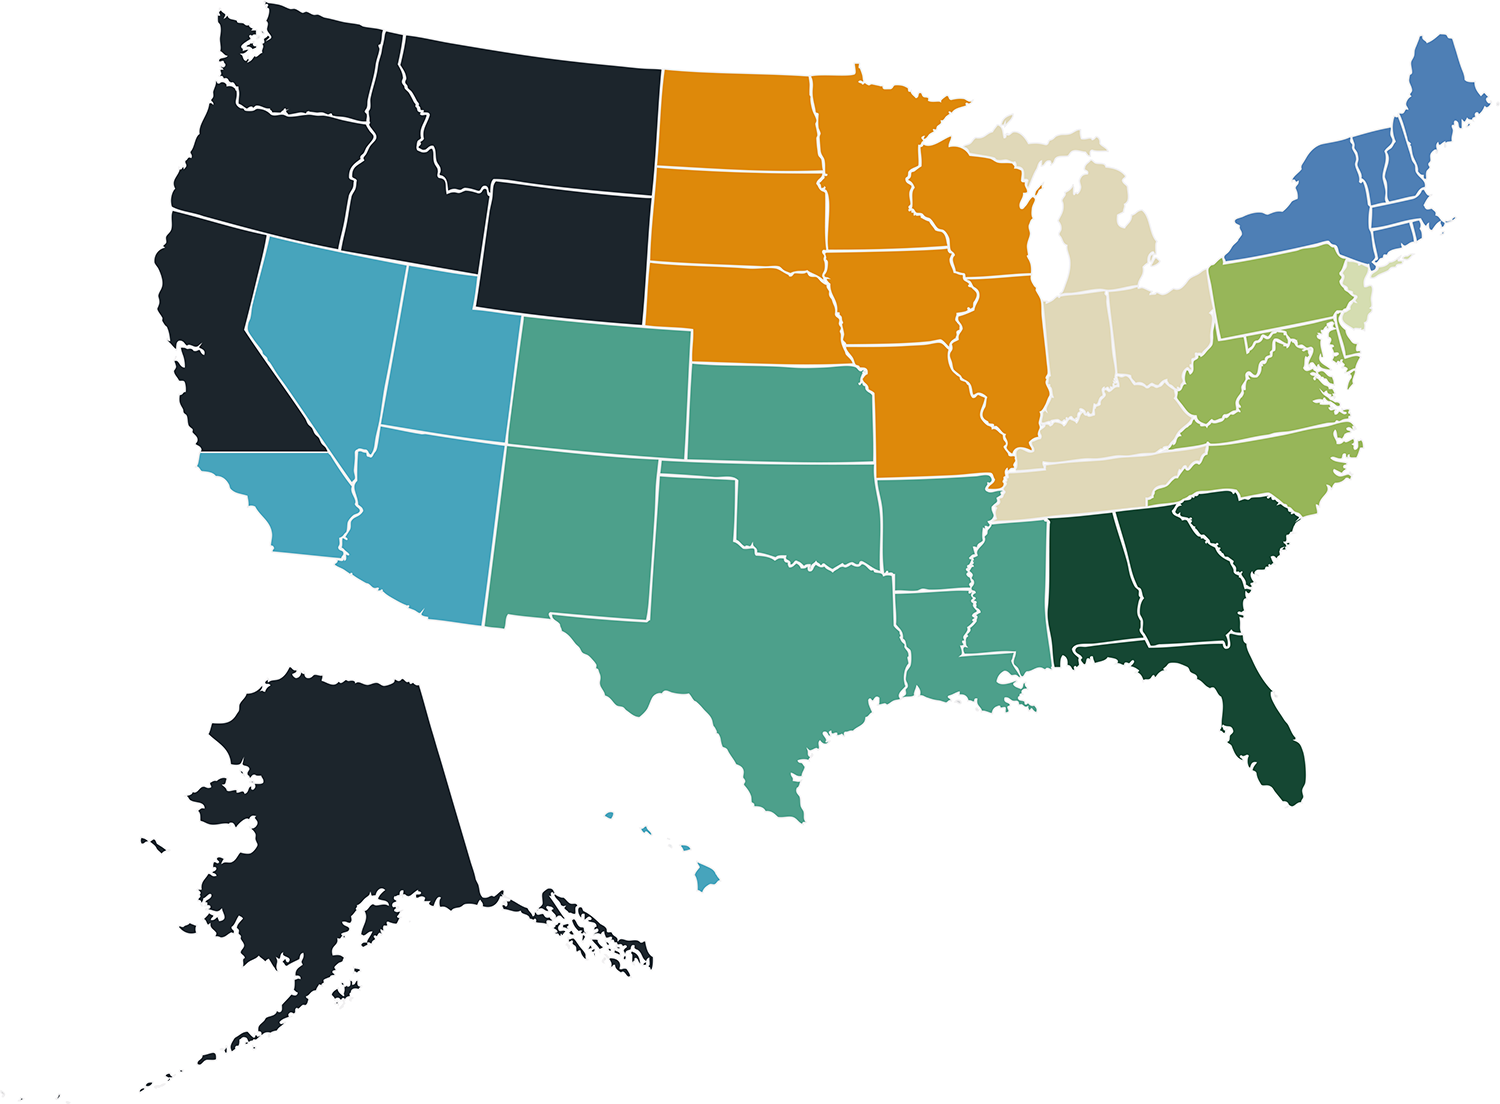 Map of Zacks wholesale representative regions across the US.